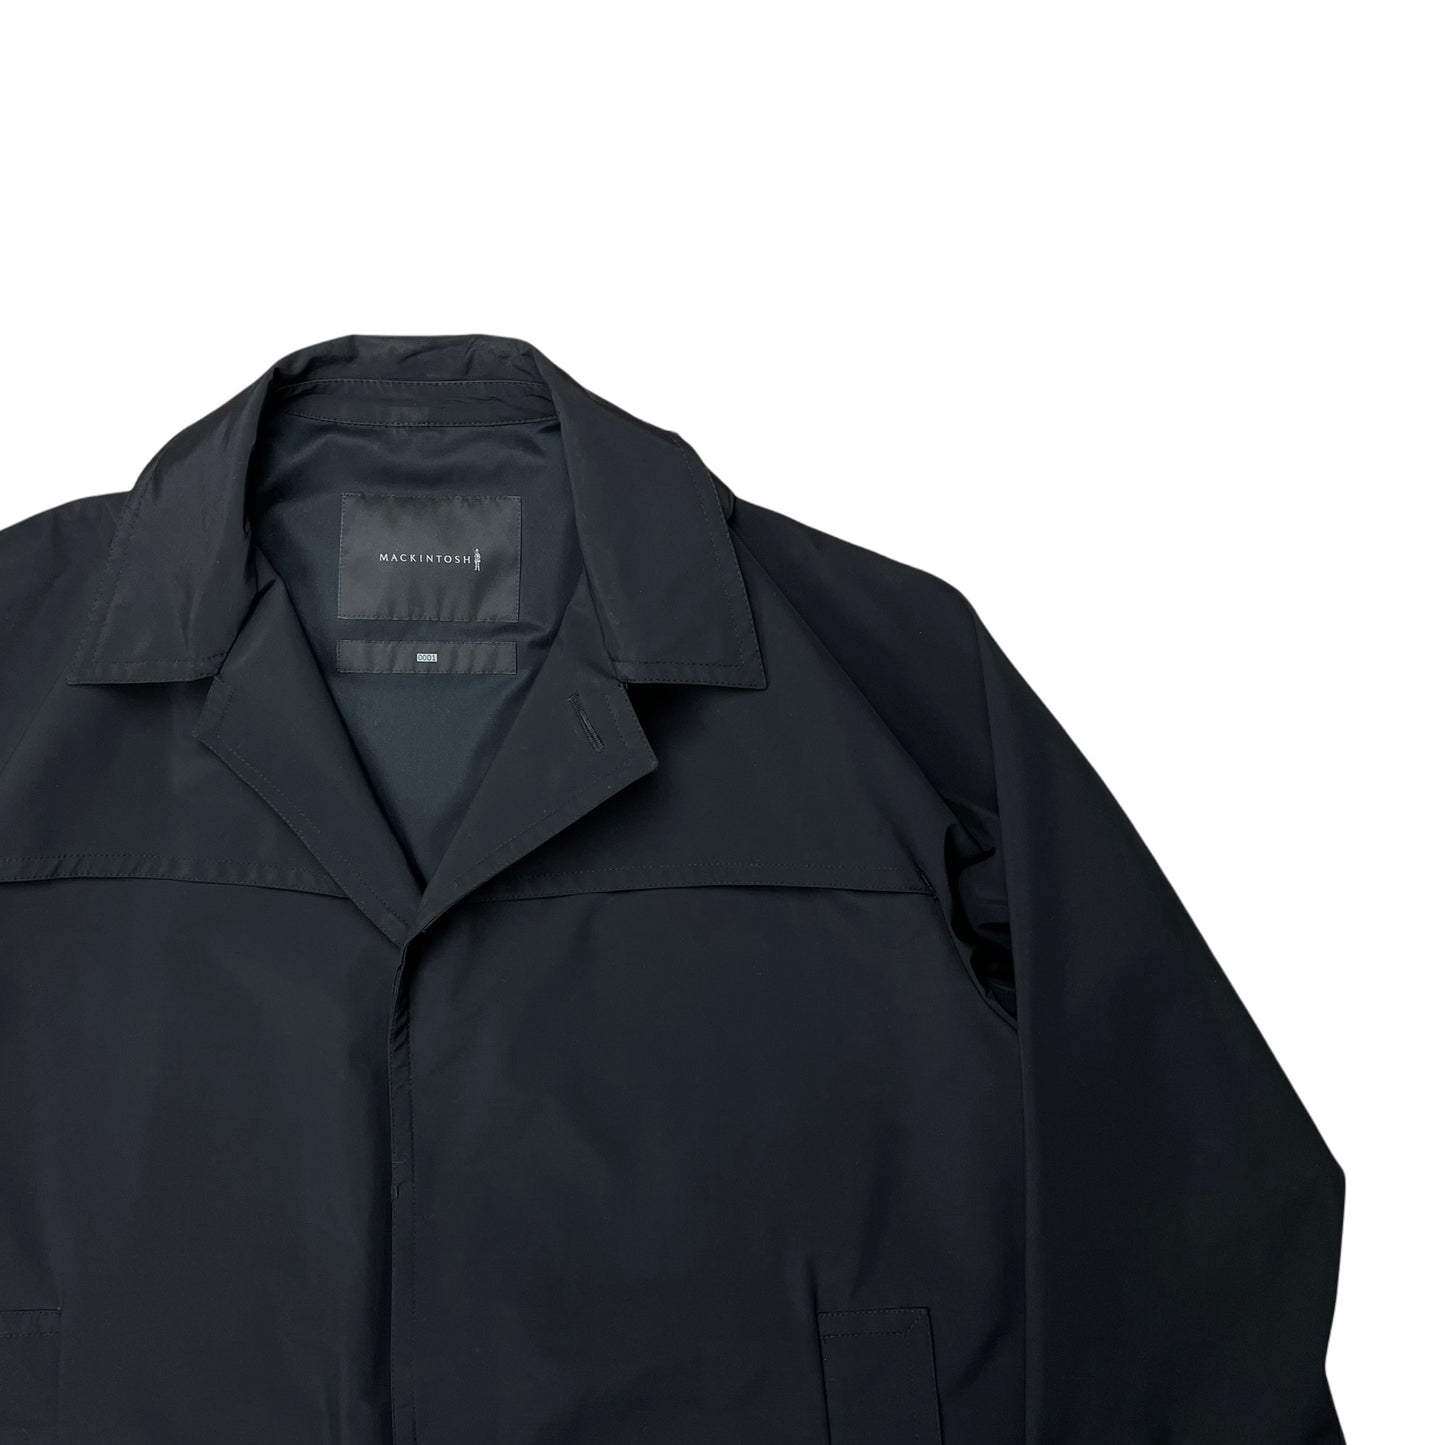 Mackintosh 0001 Black Hooded Trench Coat - AW17